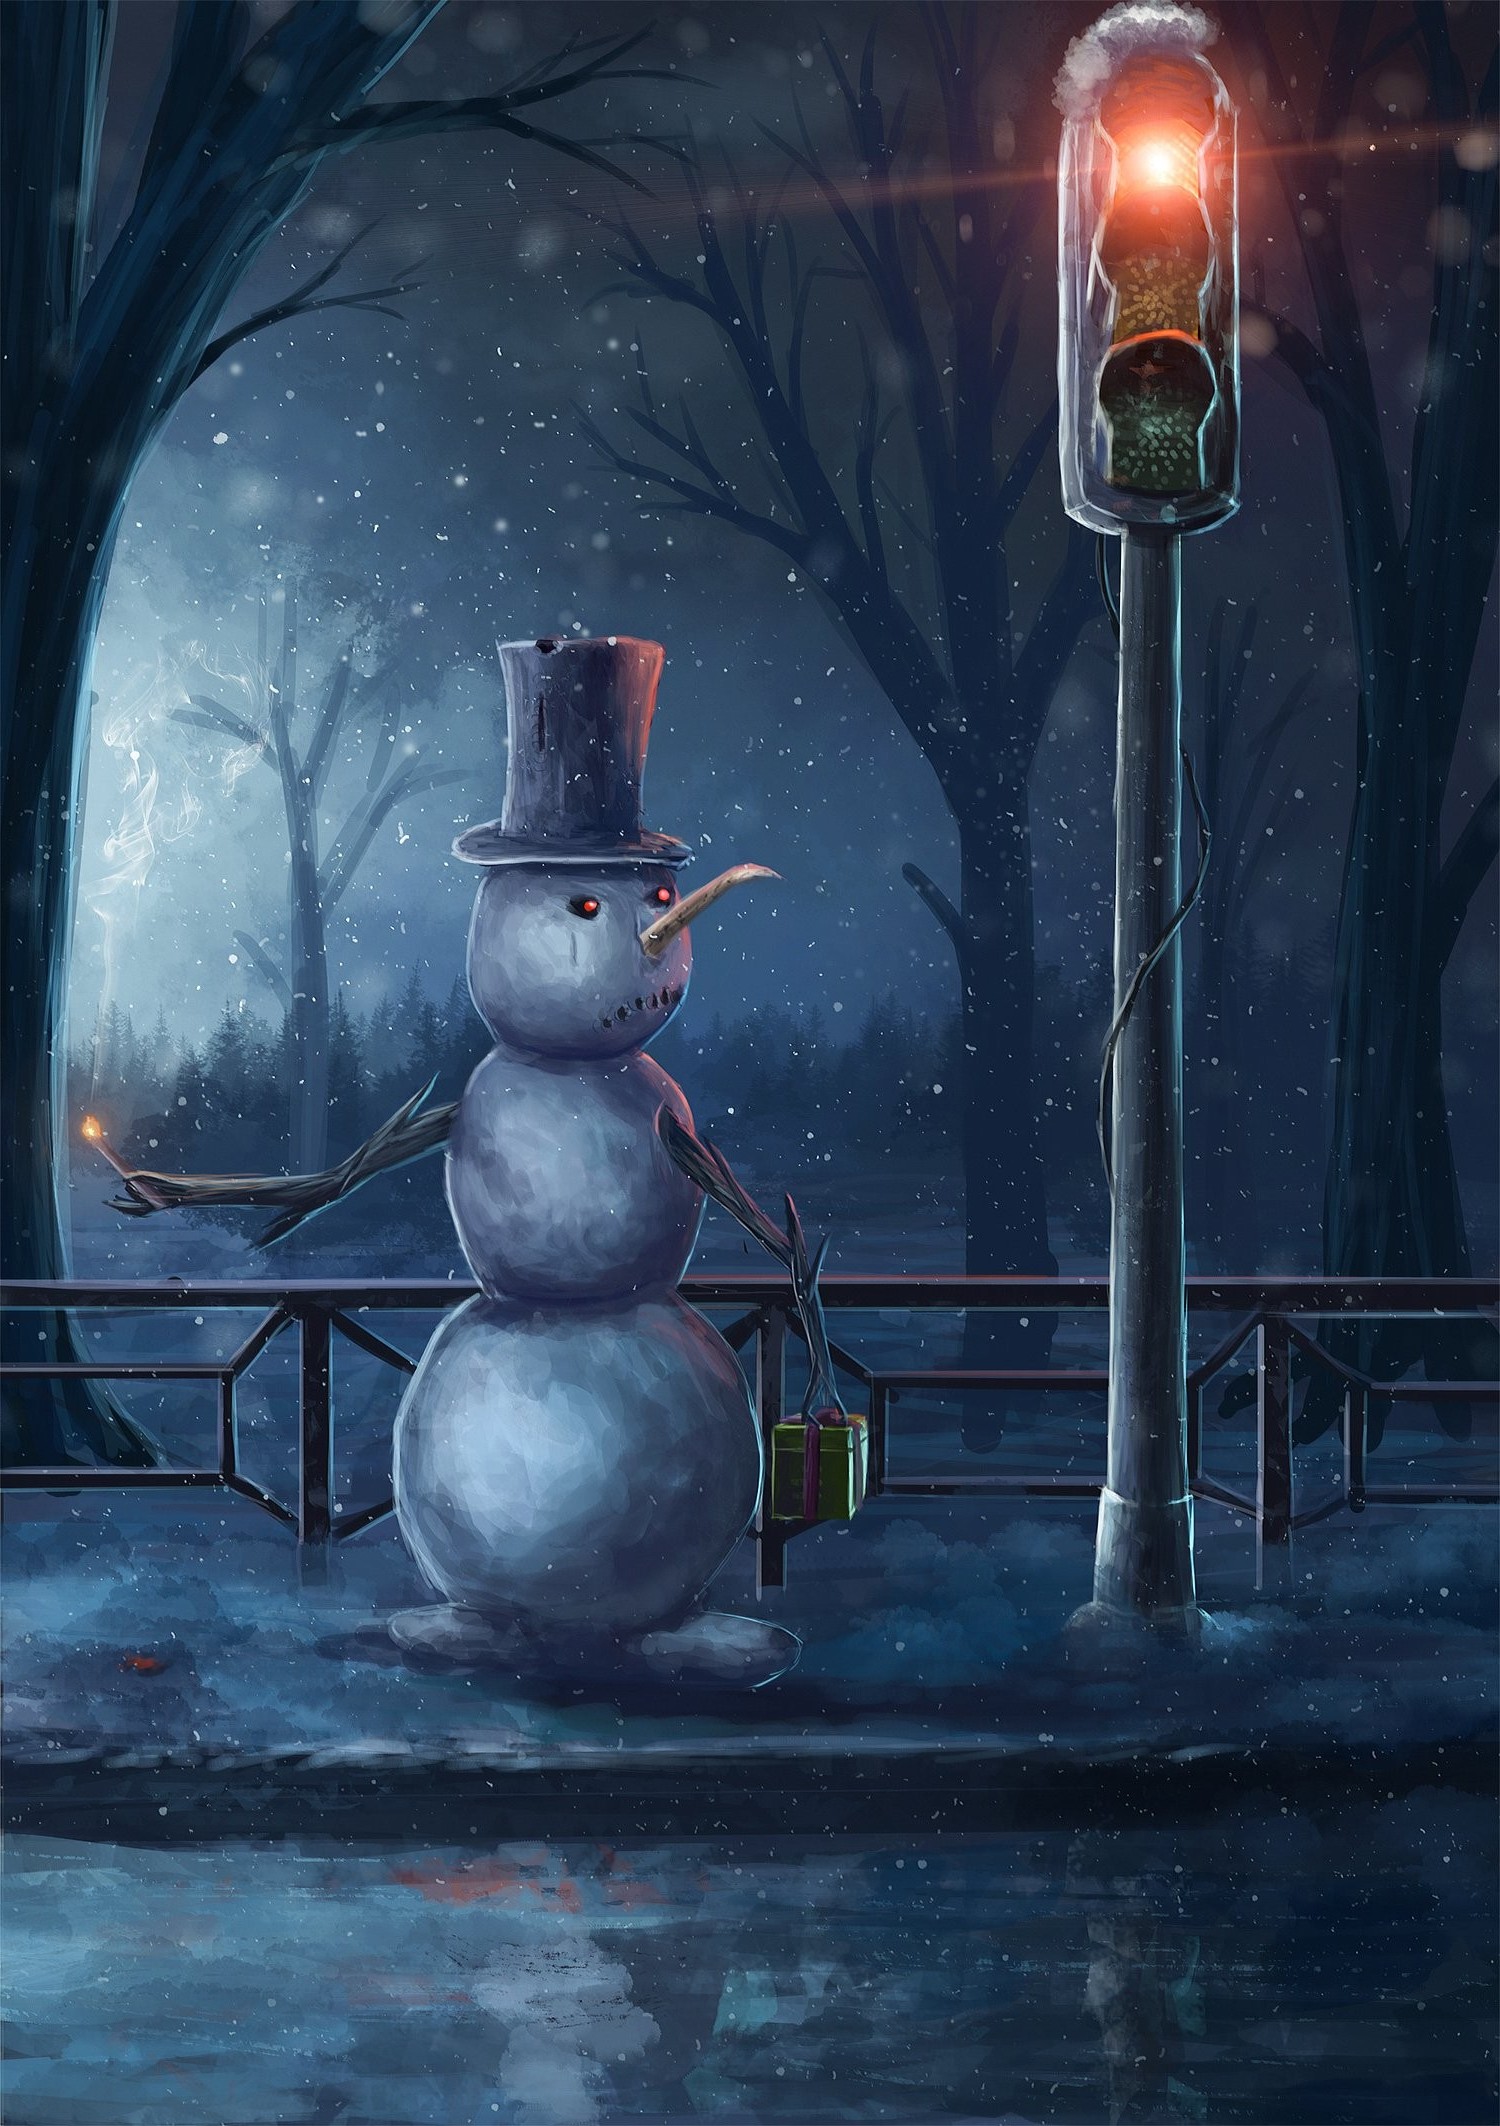 drawing, Snow, Winter, Snowman, Top hats, Branch, Snowflakes, Traffic lights, Trees, Presents, Sad Wallpaper